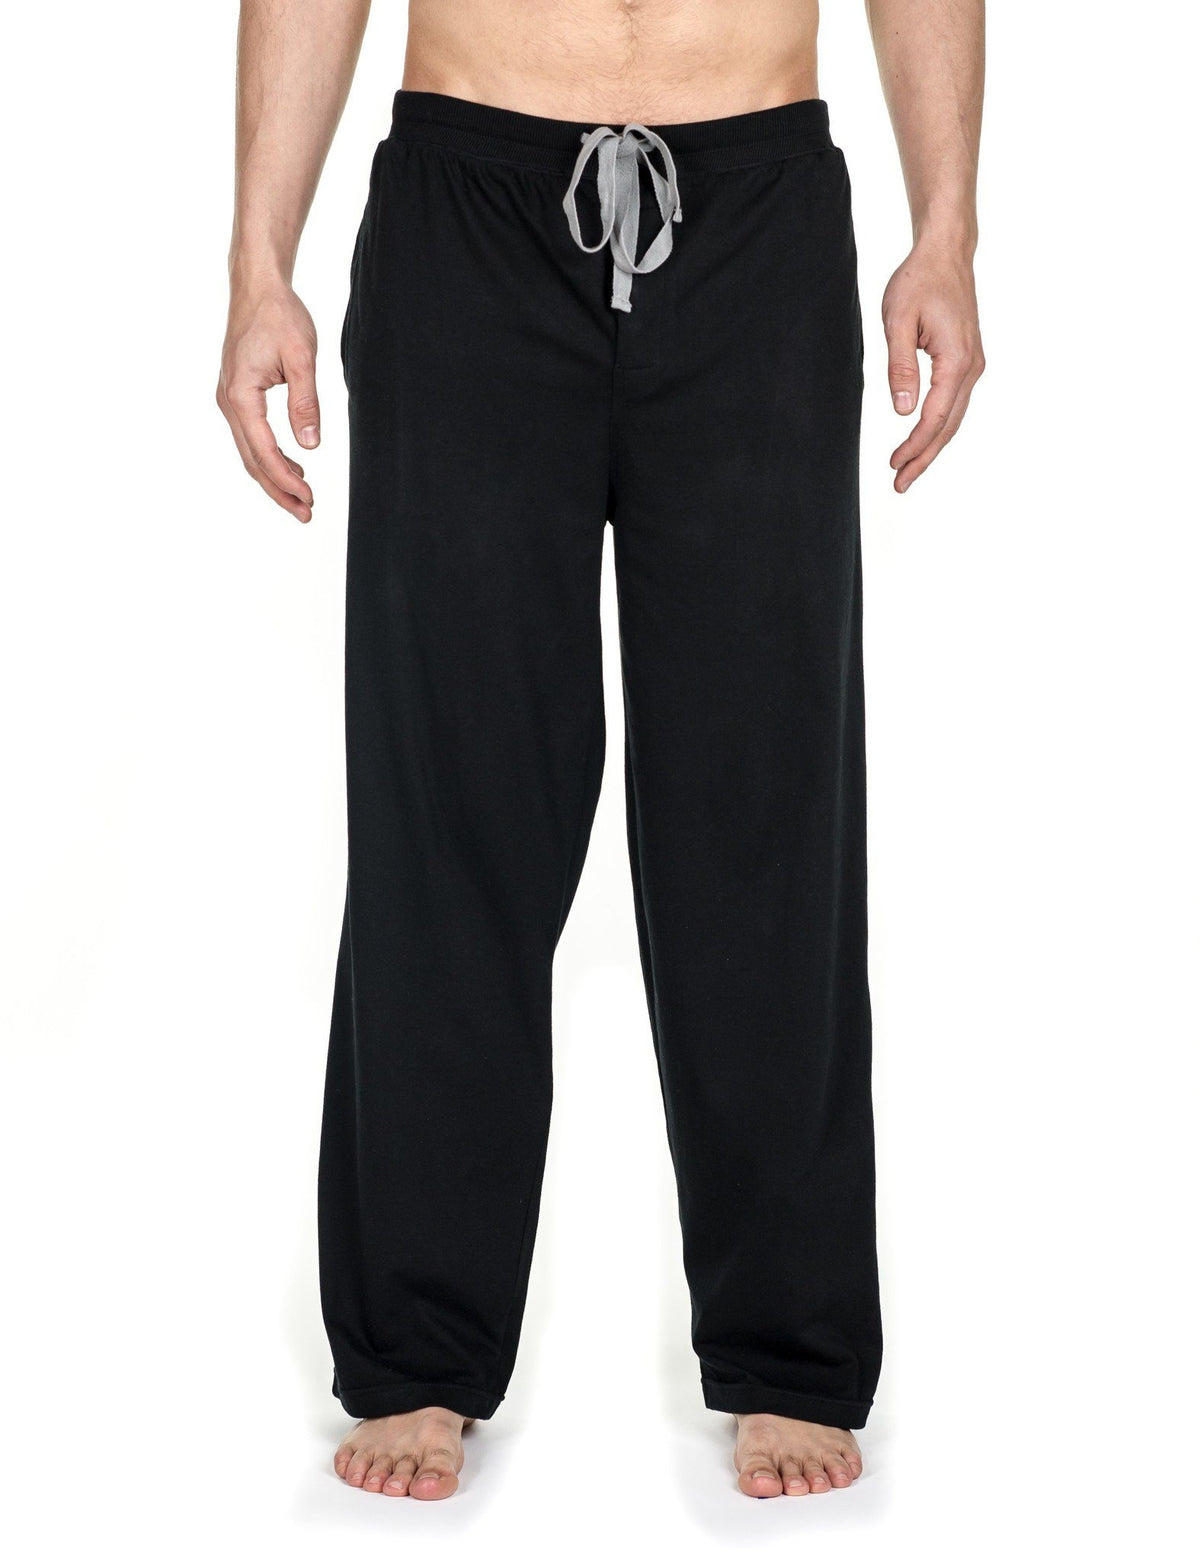 Men's Premium Knit Lounge/Sleep Pants - Black